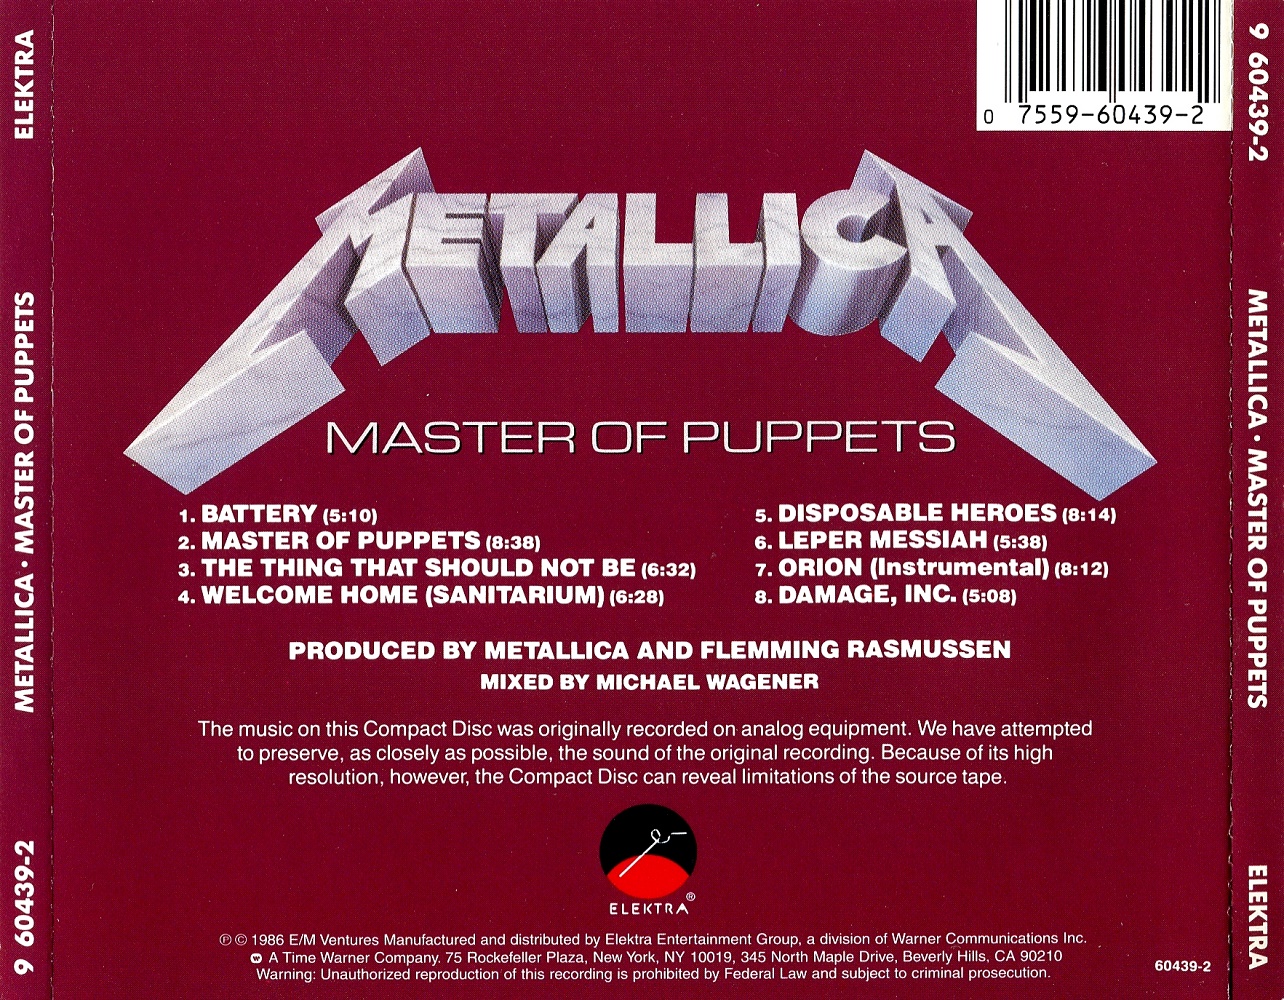 Metallica flac. Группа Metallica 1986. Обложка альбома металлика мастер оф папетс. Metallica Master Master. Metallica 1986 Master of Puppets.